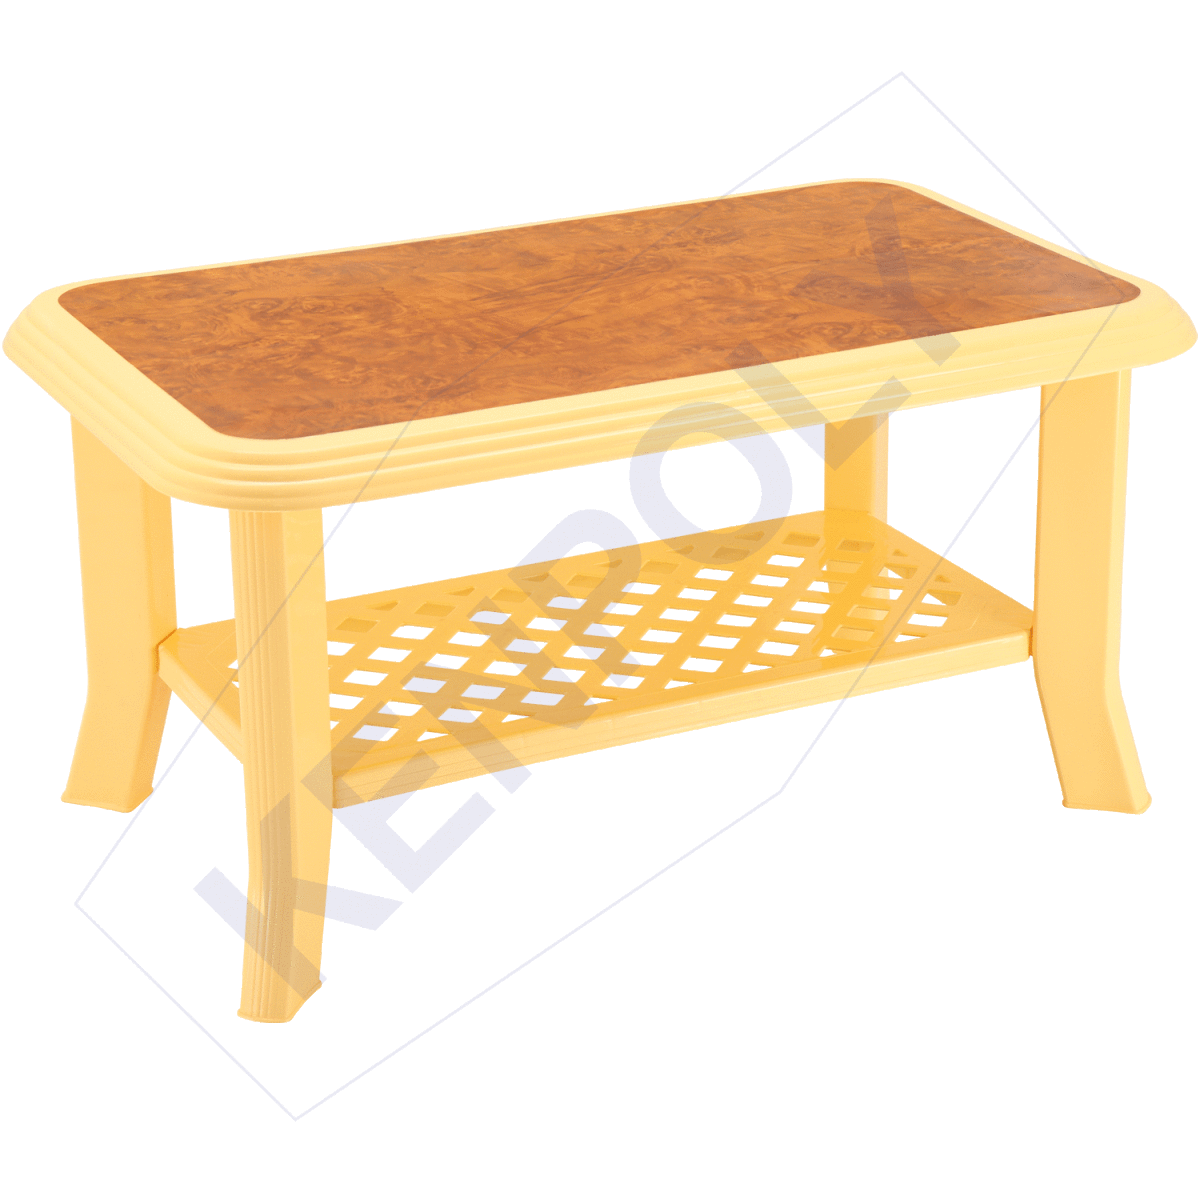 Wood Finish Coffee Table 3007